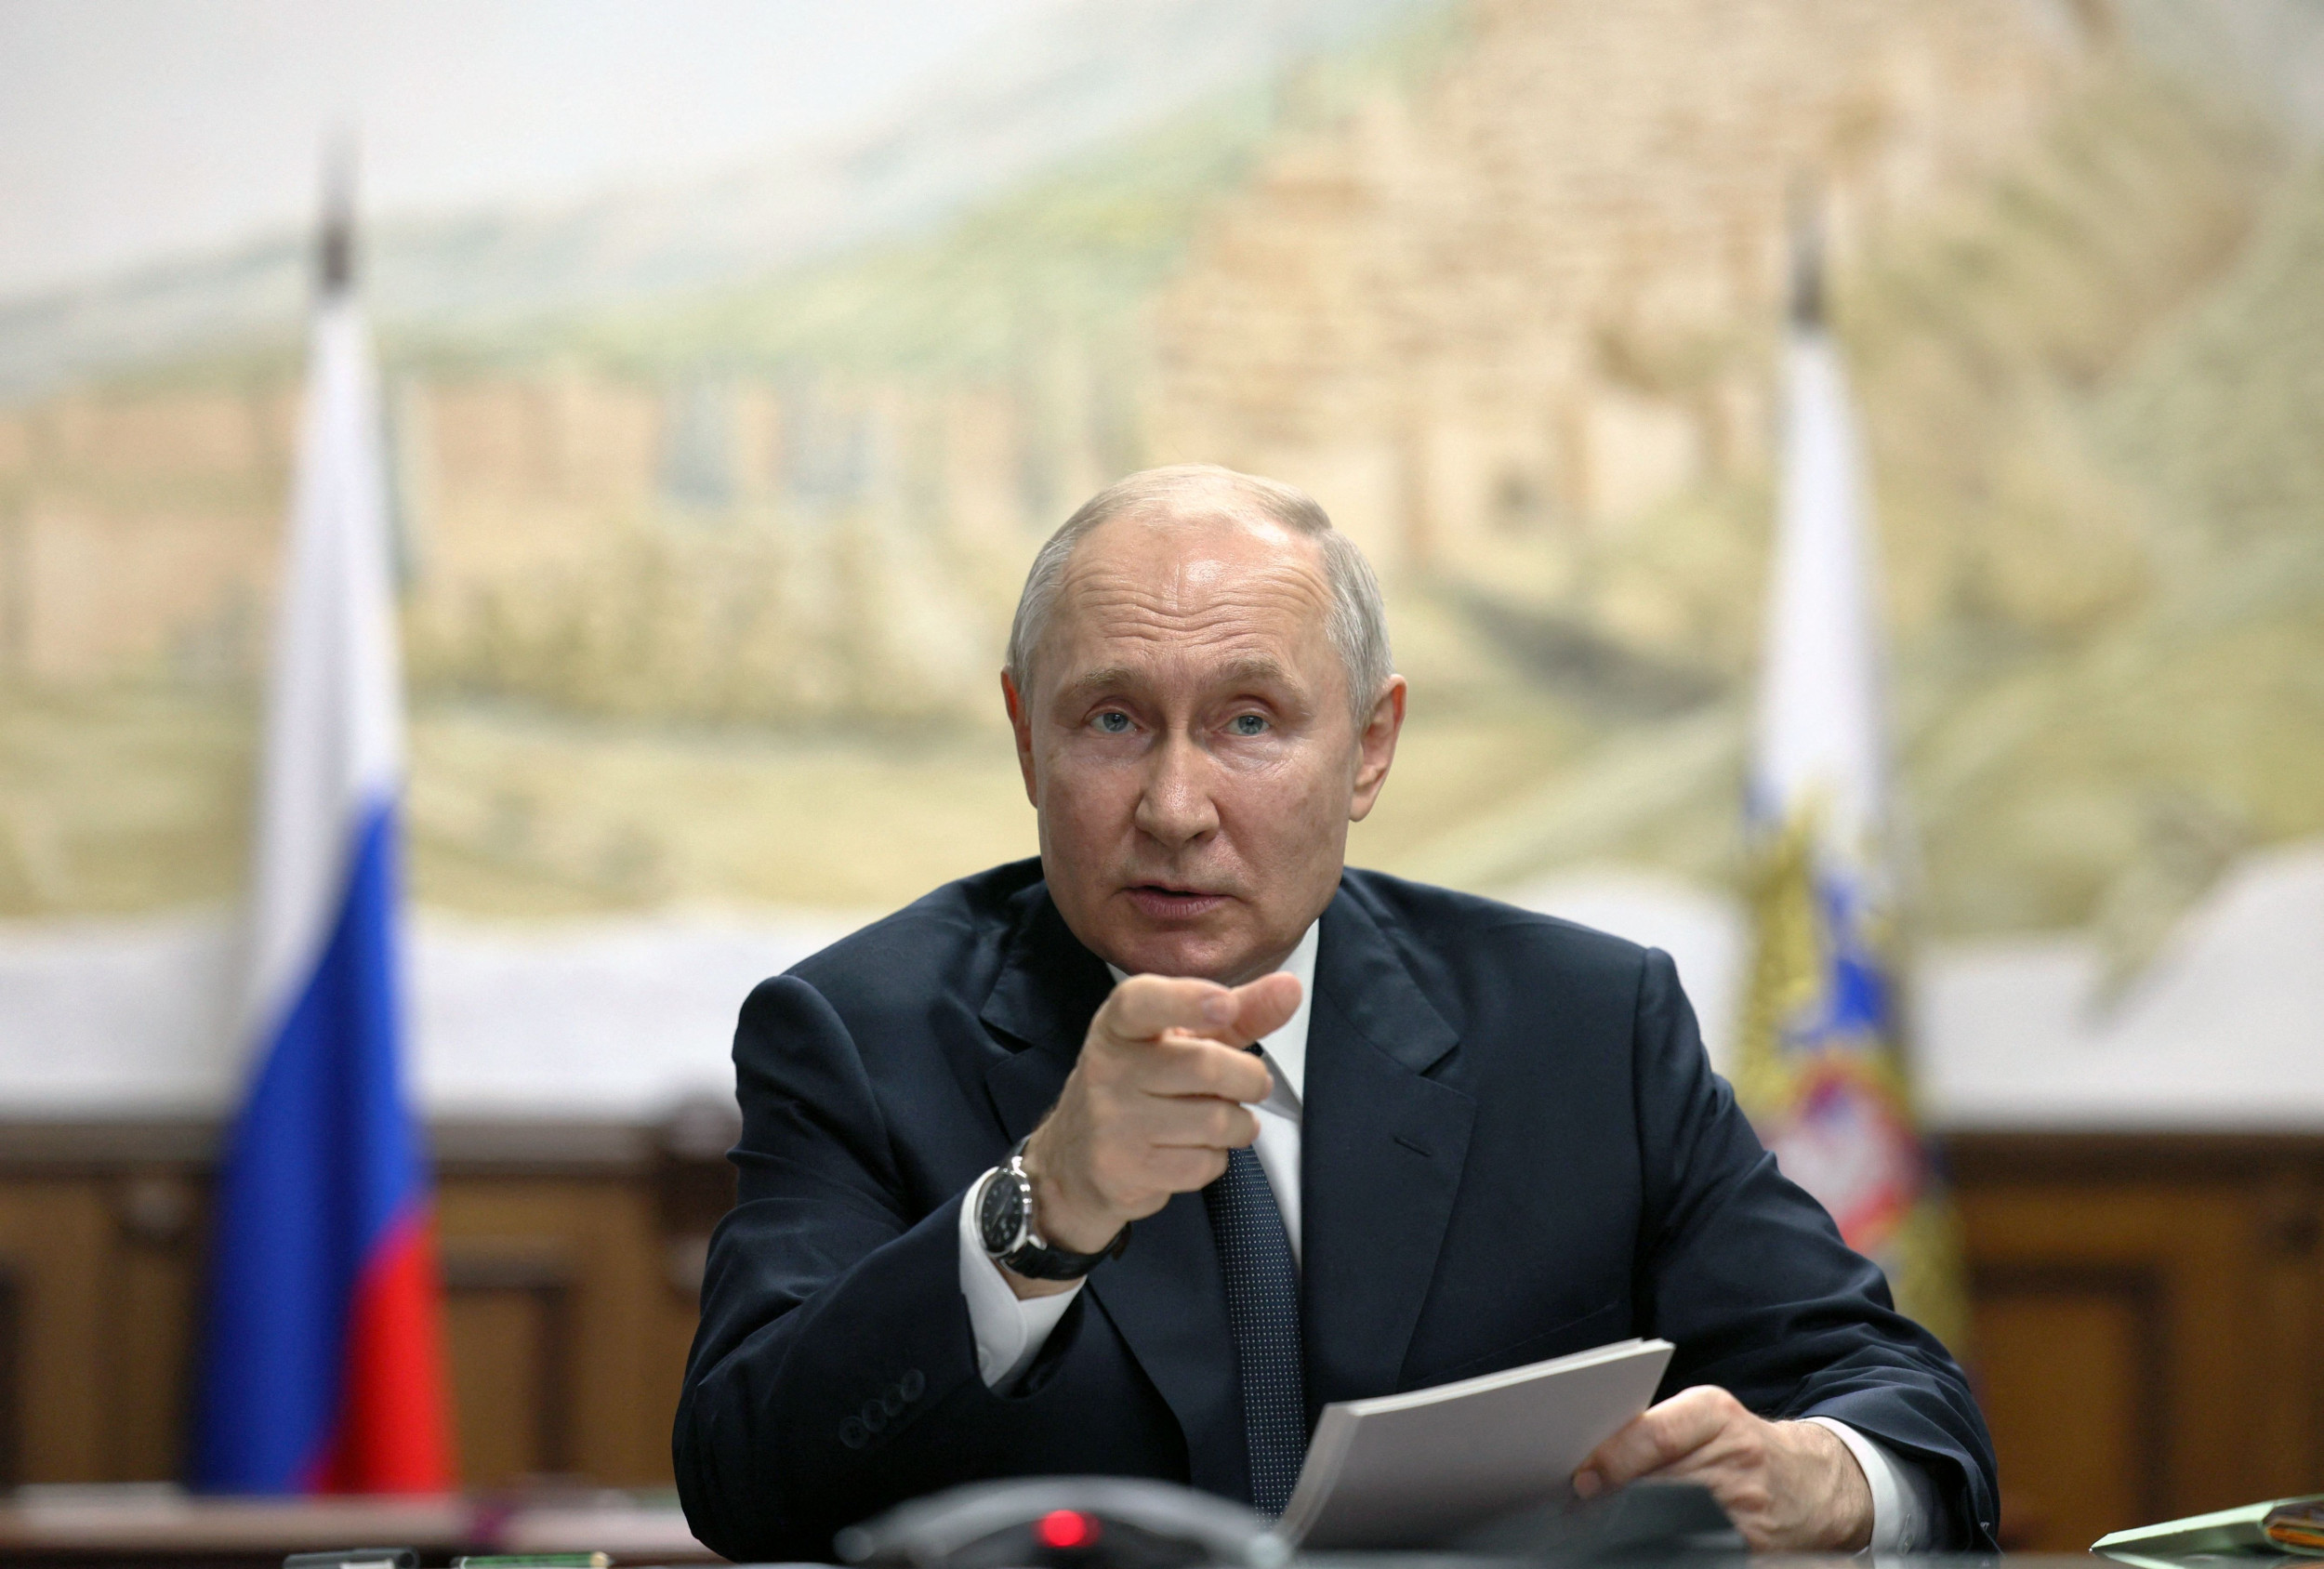 Putin regime has “no chance” of surviving Ukraine victory